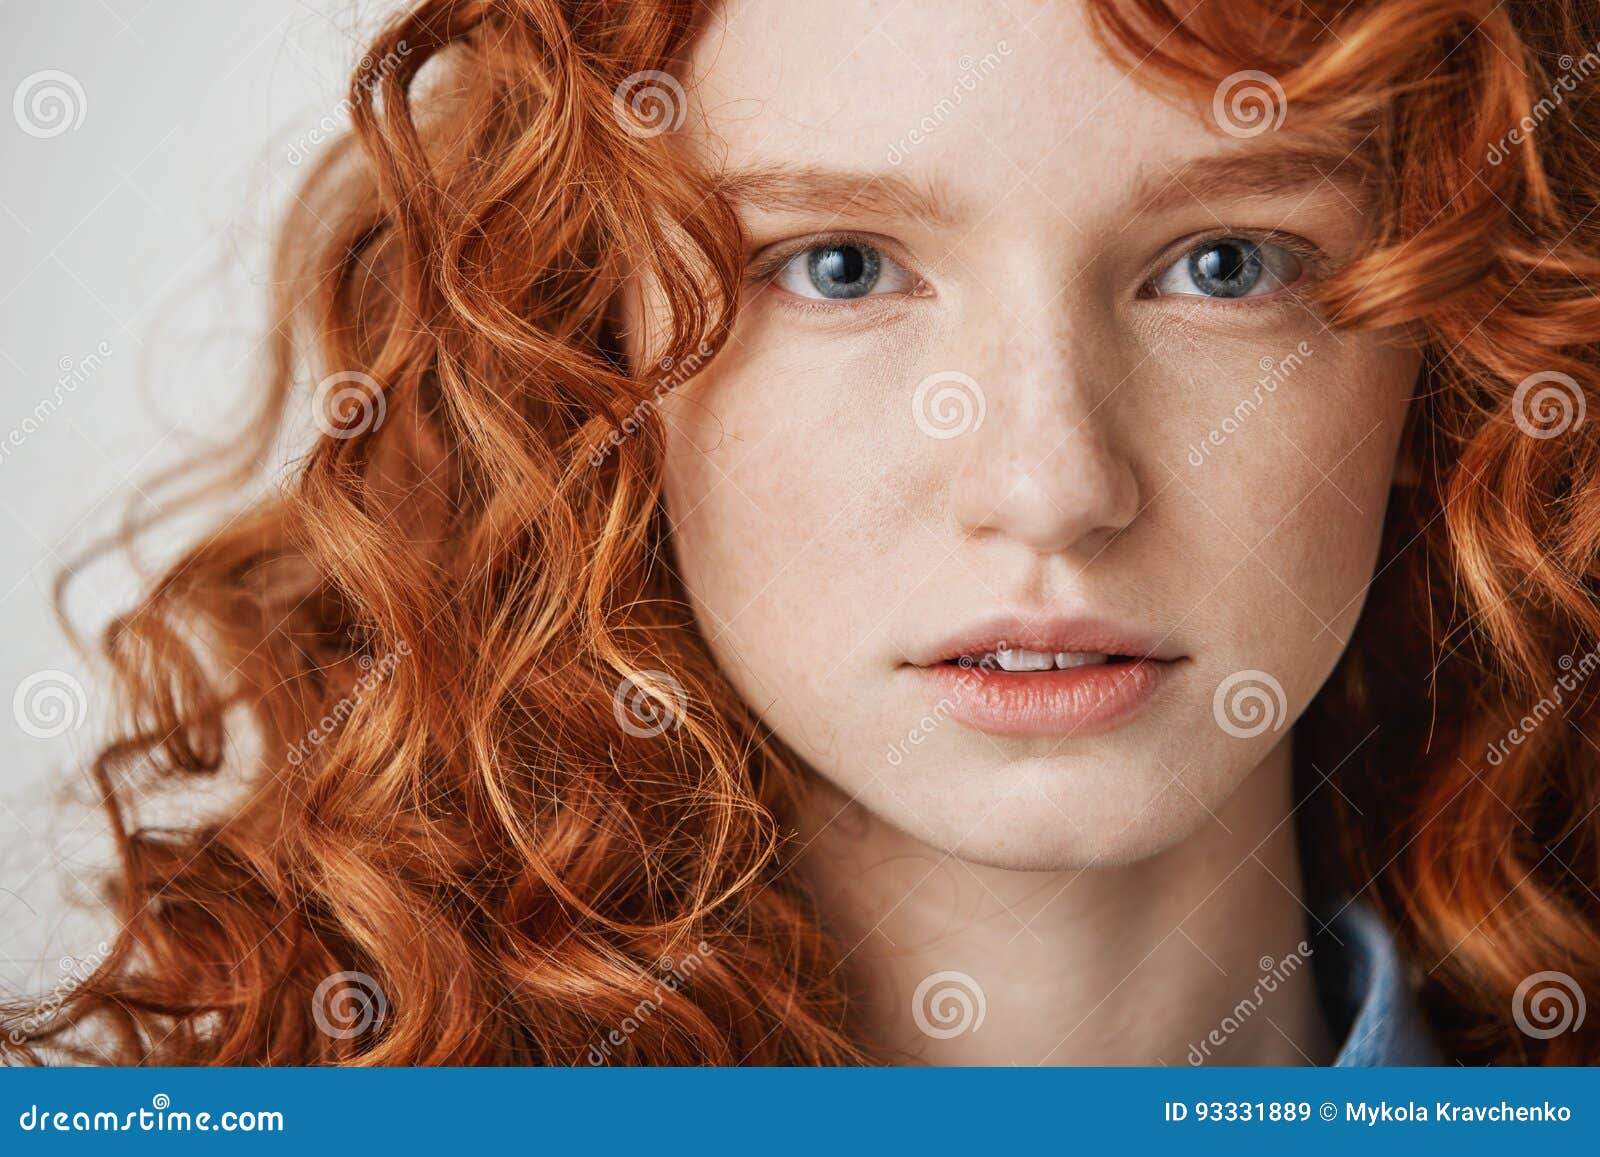 Stunning pale redhead on web camera